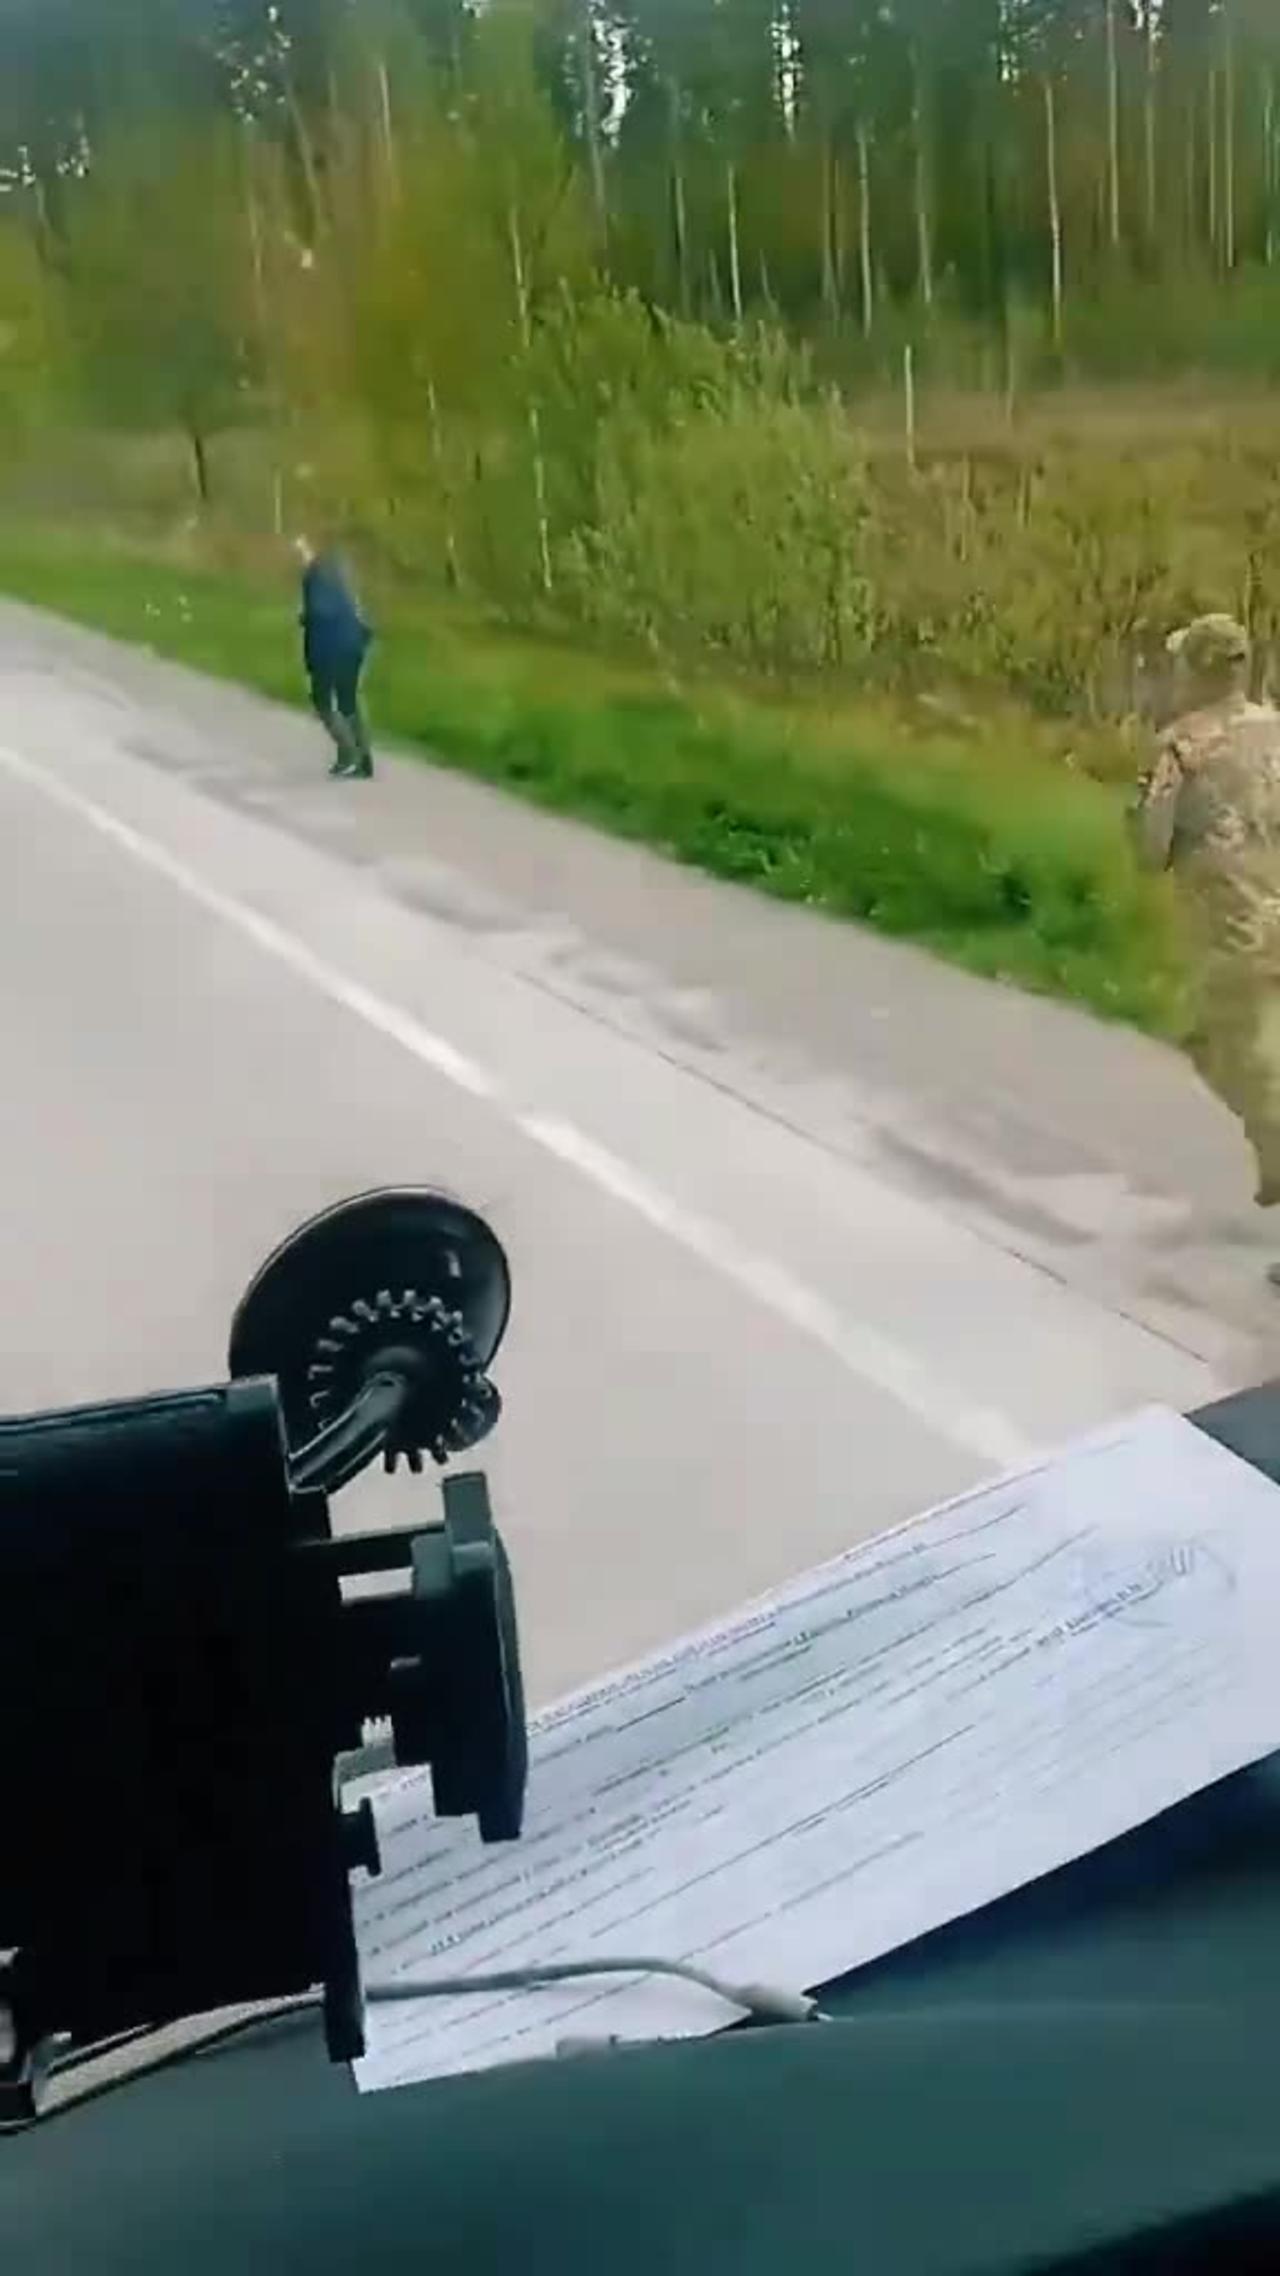 A Ukrainian guy running towards the Moldovan border